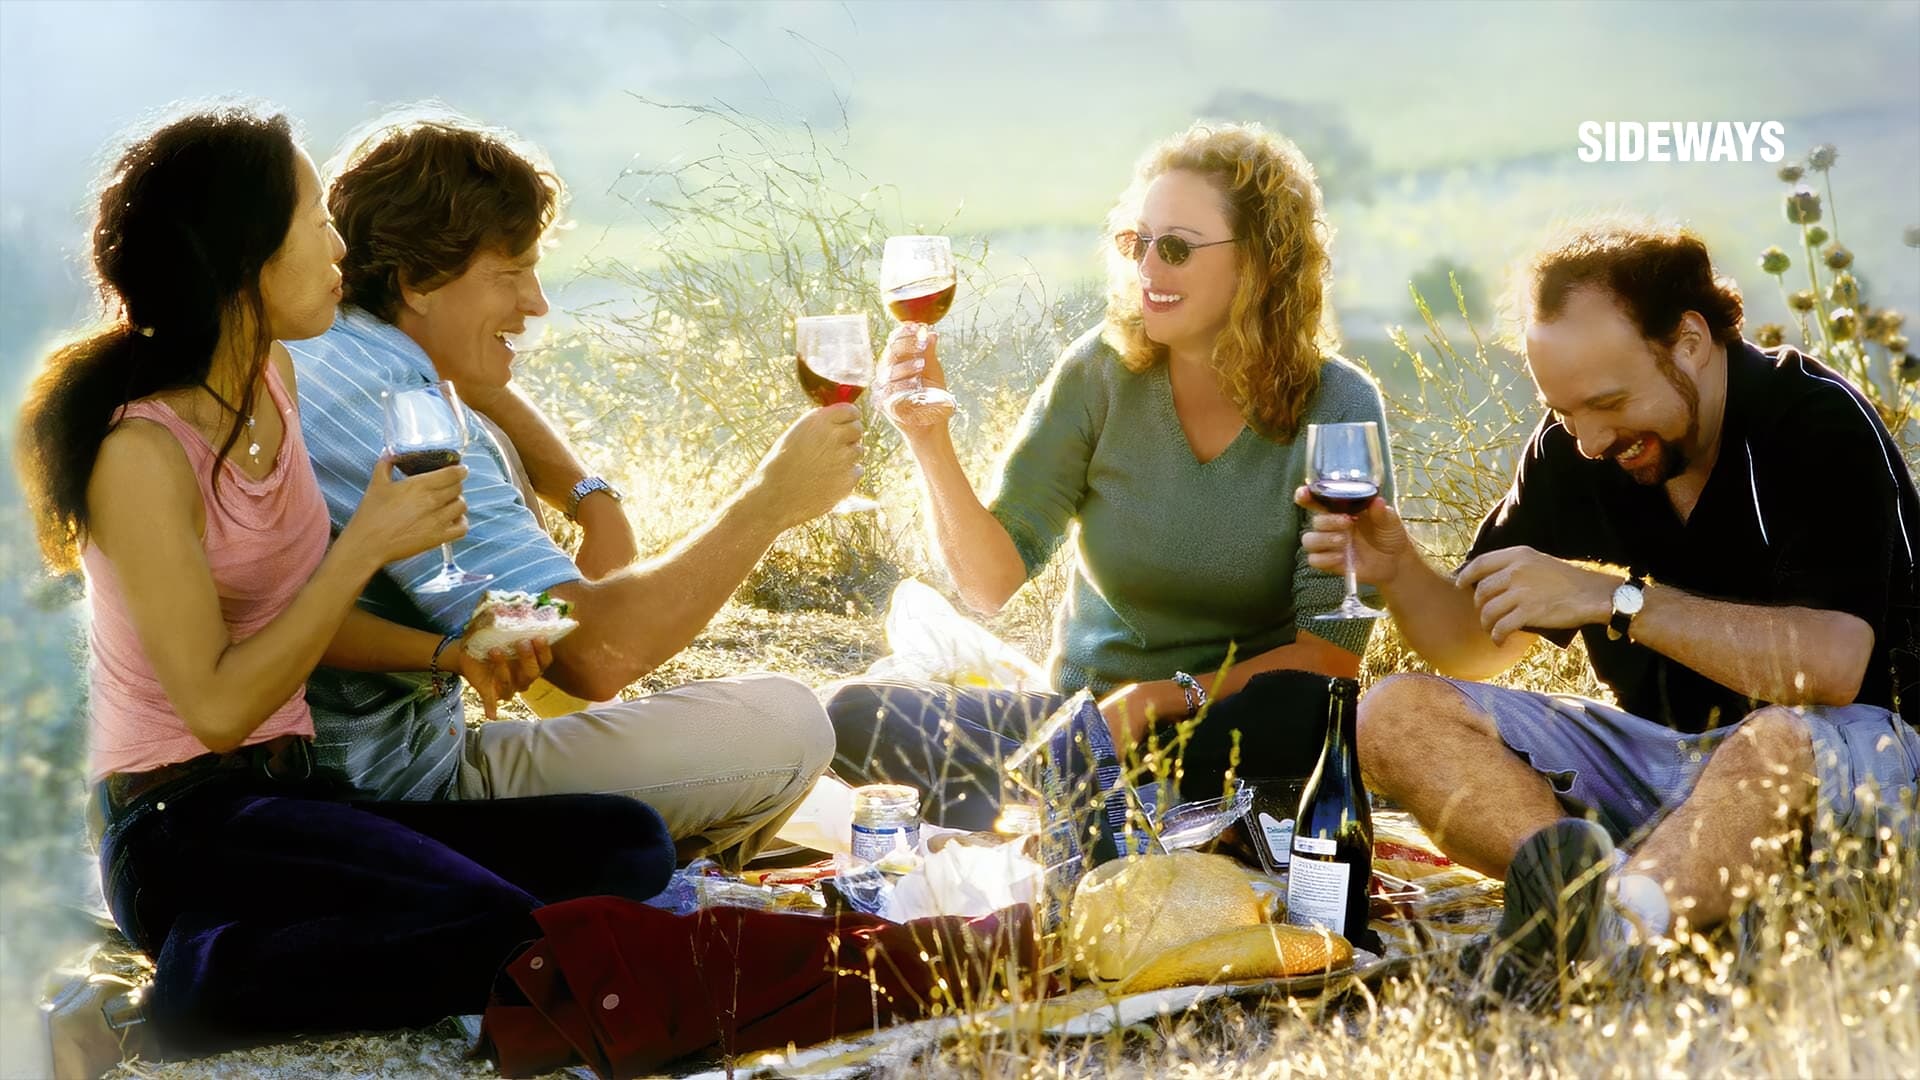 In vino veritas (2004)